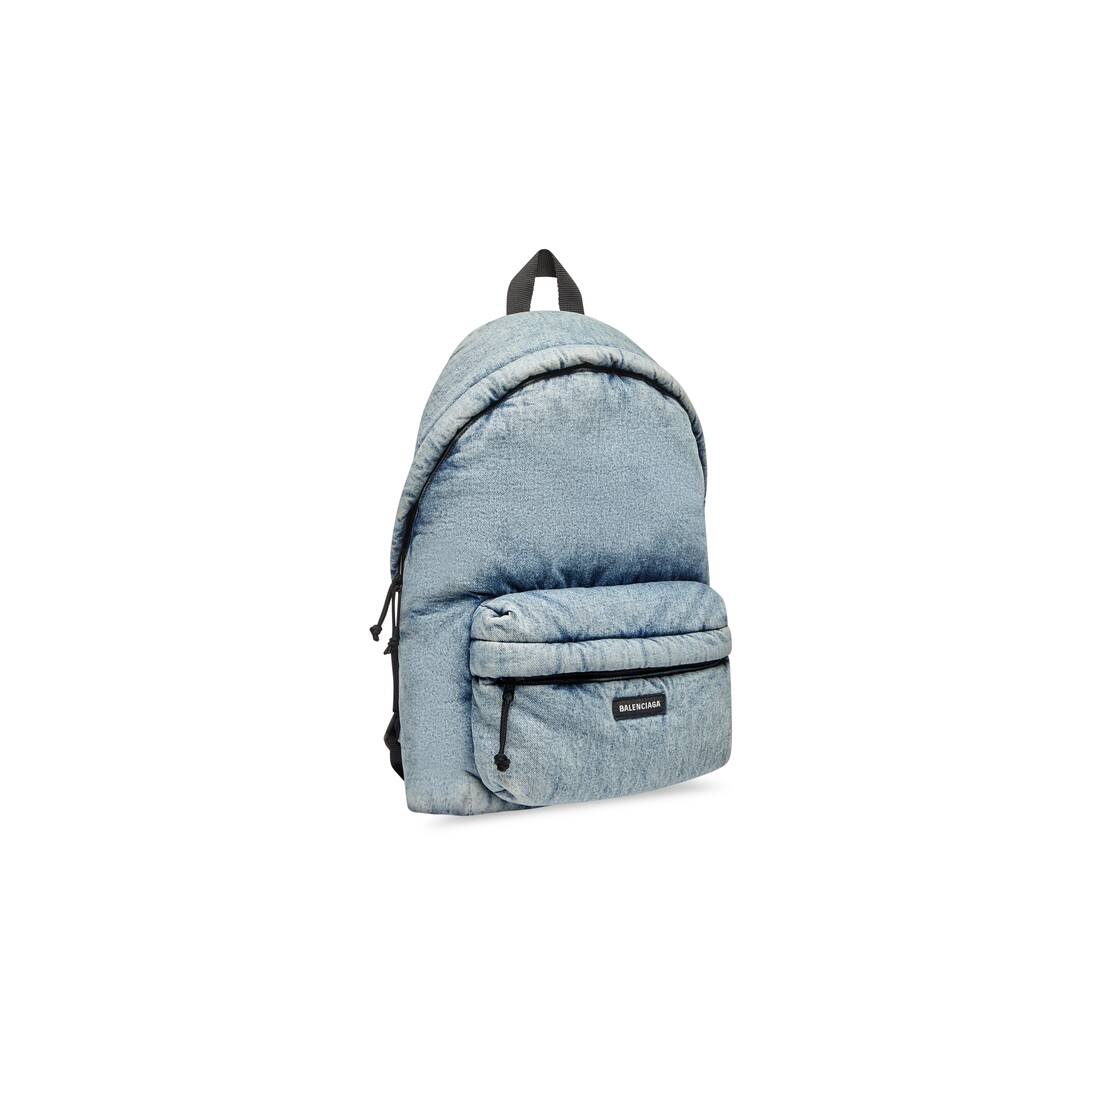 Men's Explorer Backpack In Denim in Faded Blue - 4